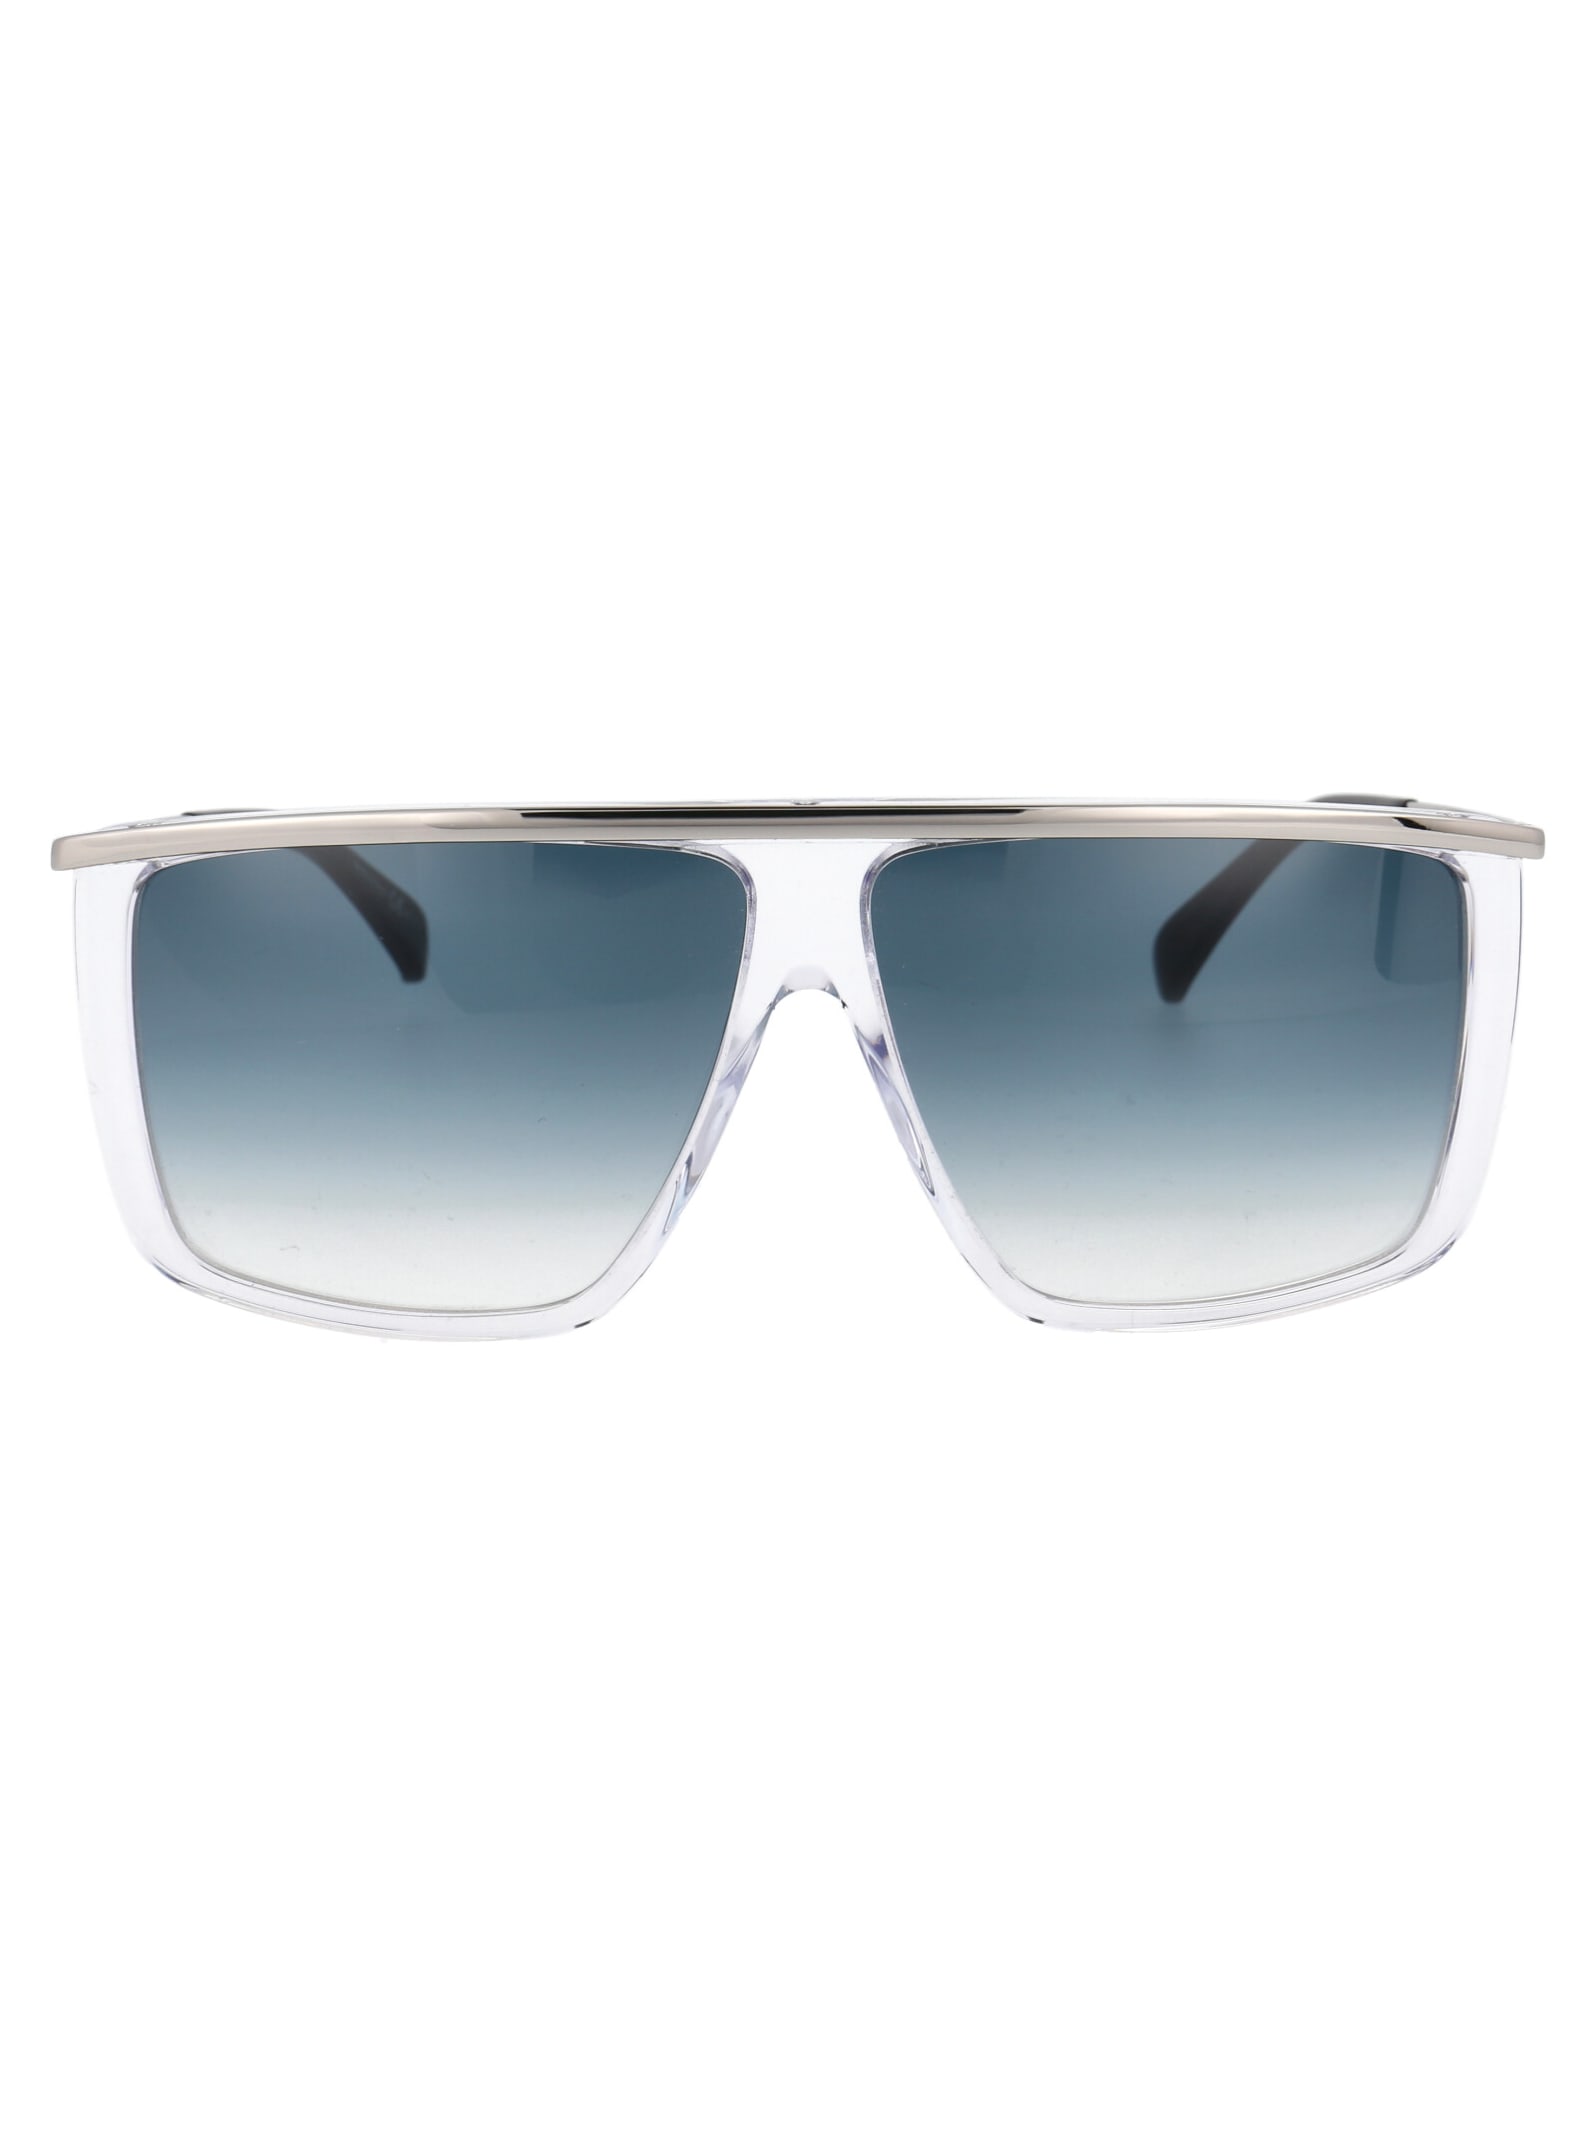 Givenchy Gv 7146/g/s Sunglasses In Gkz08 Crystal Palladium